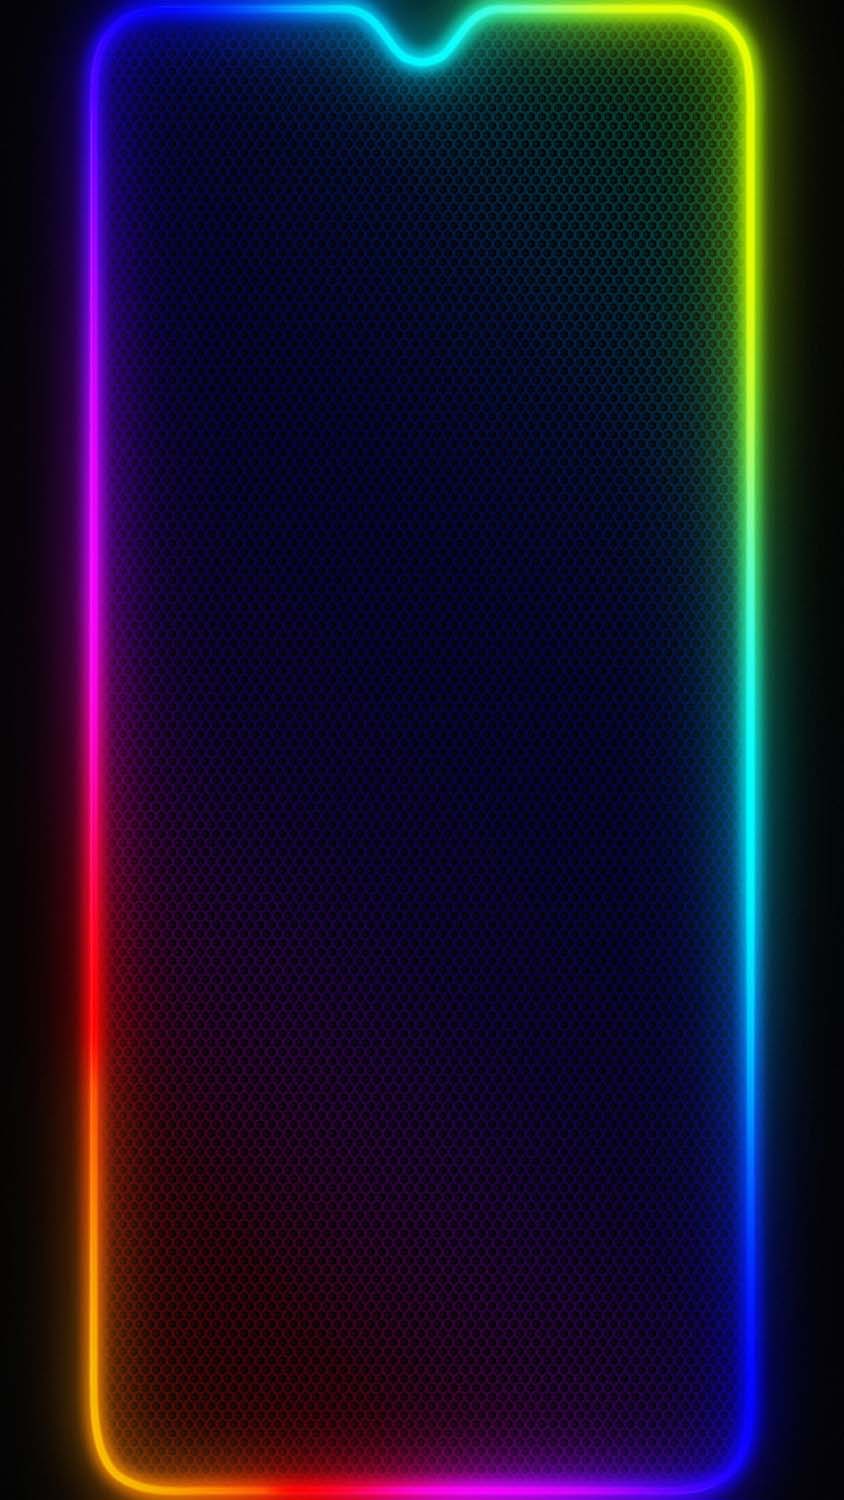 colorful lights wallpaper hd